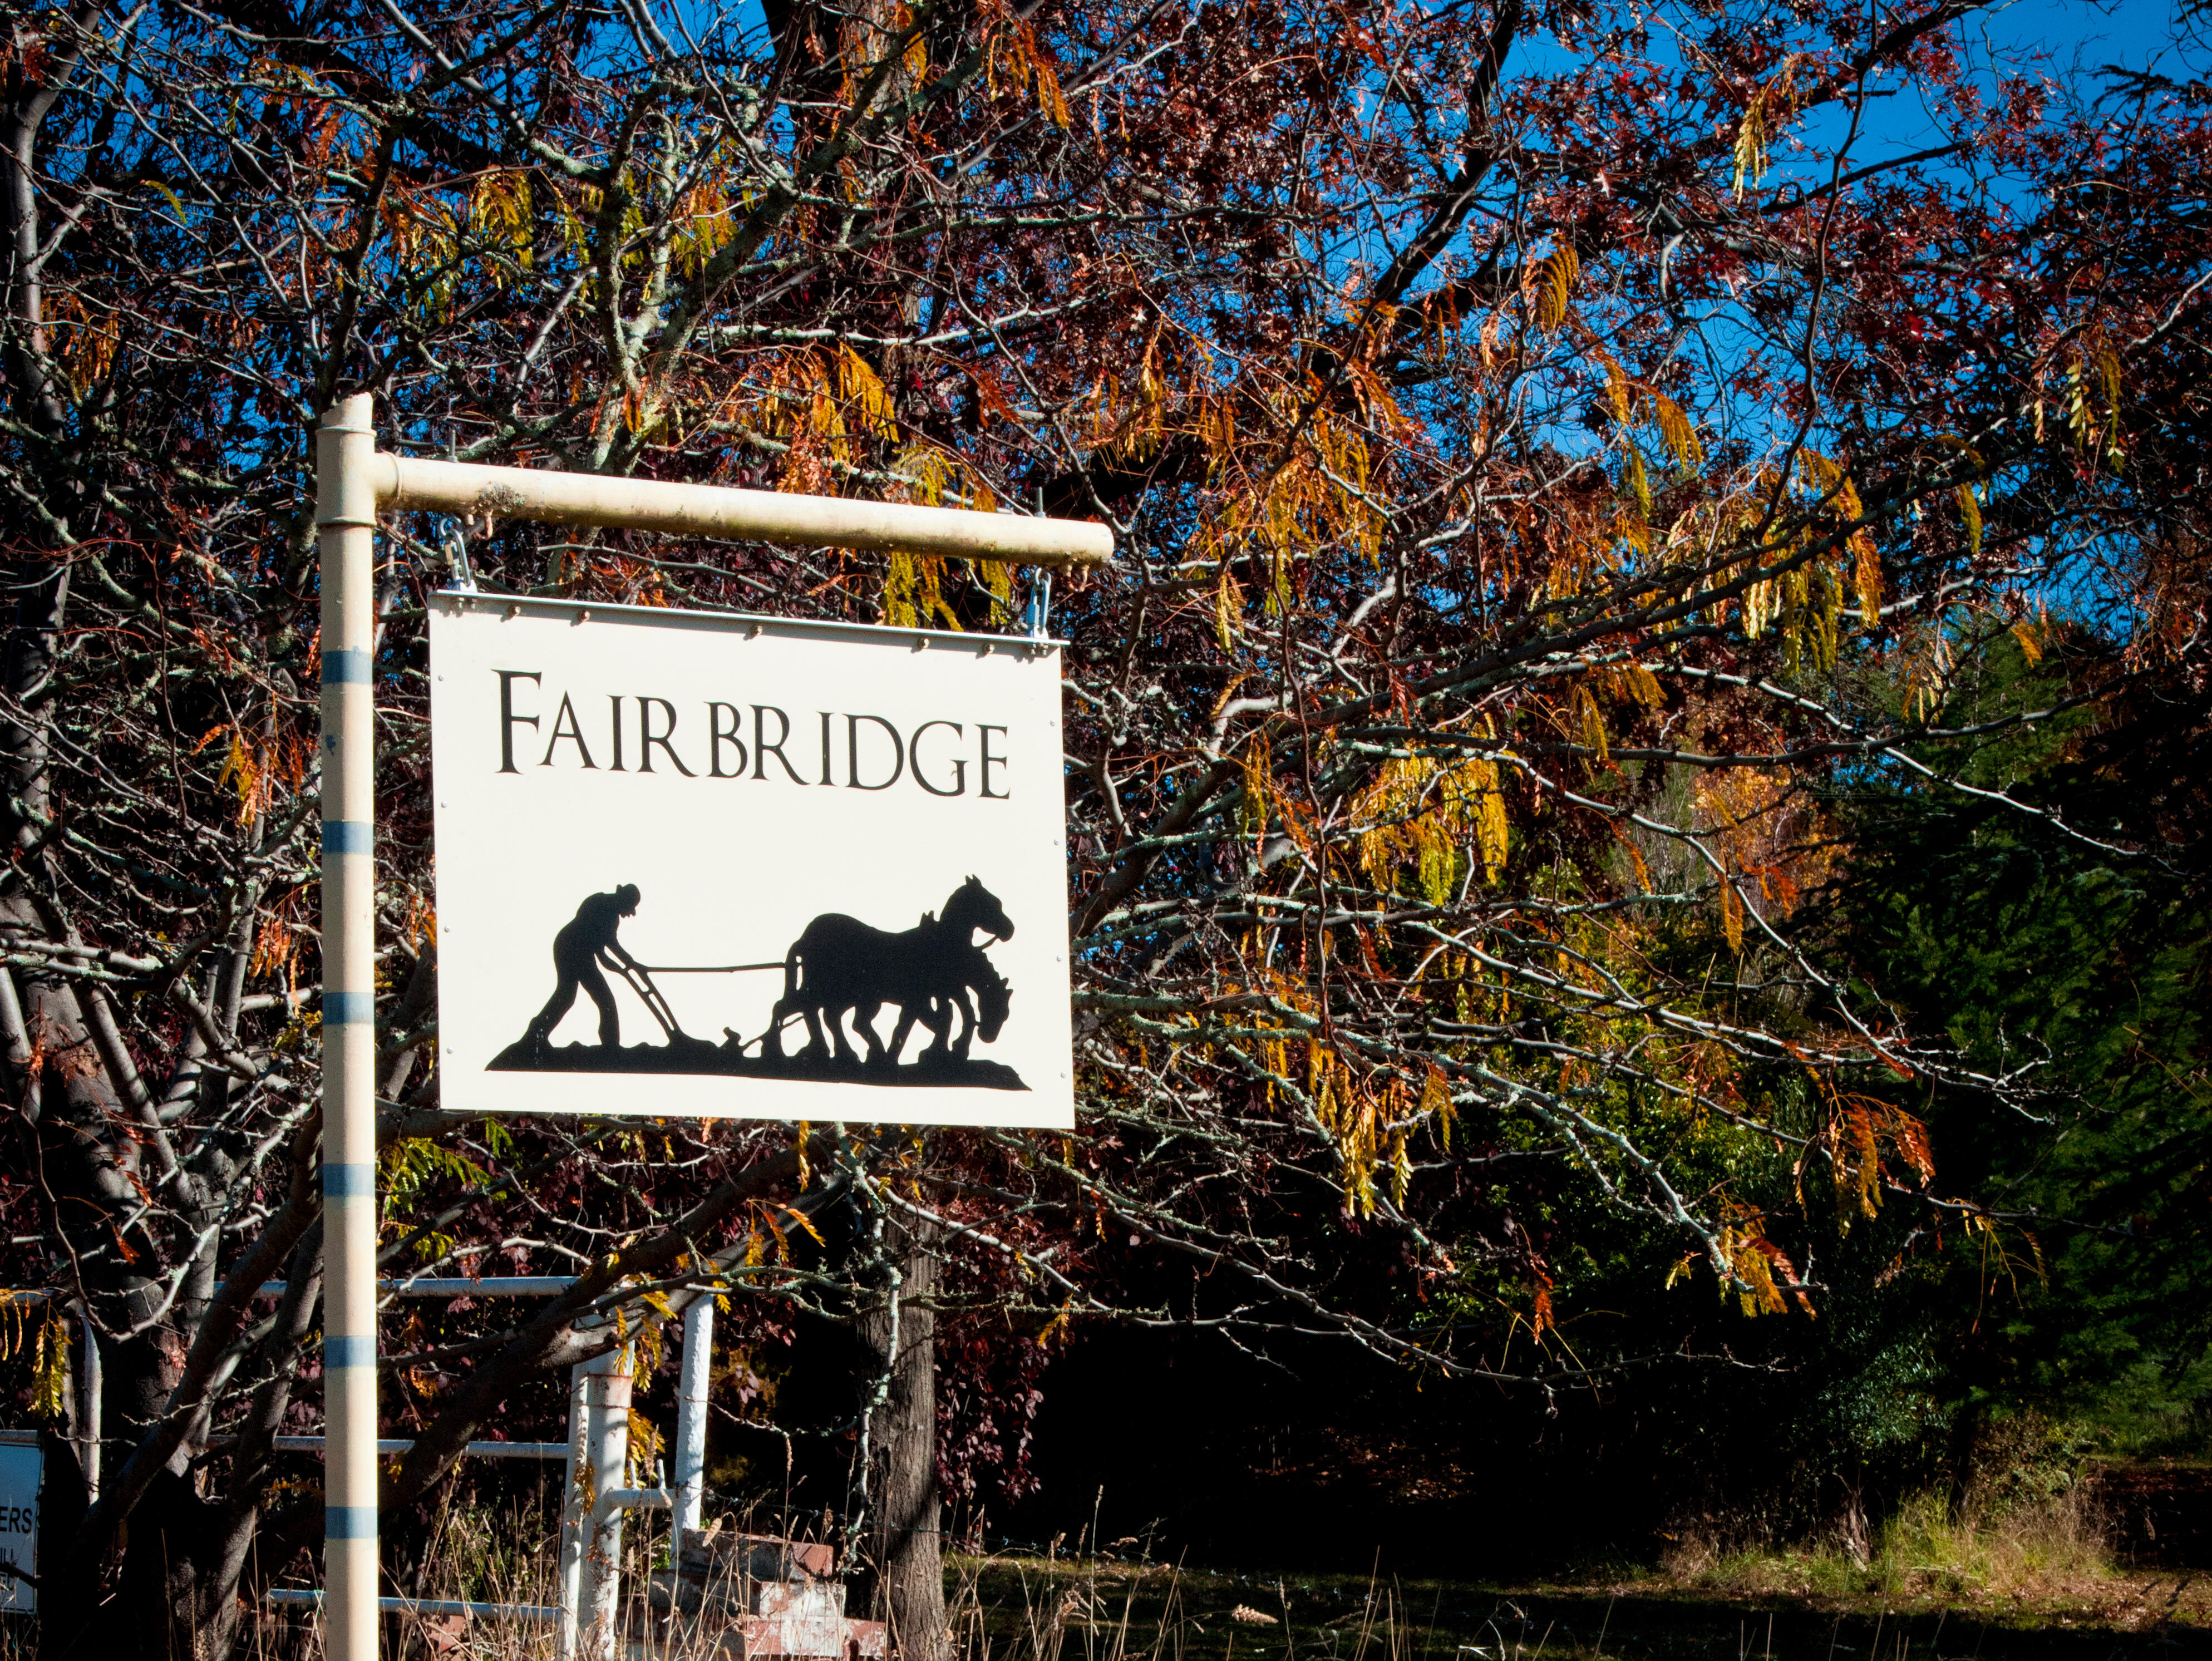 The Fairbridge farm school sign at the old Molong site